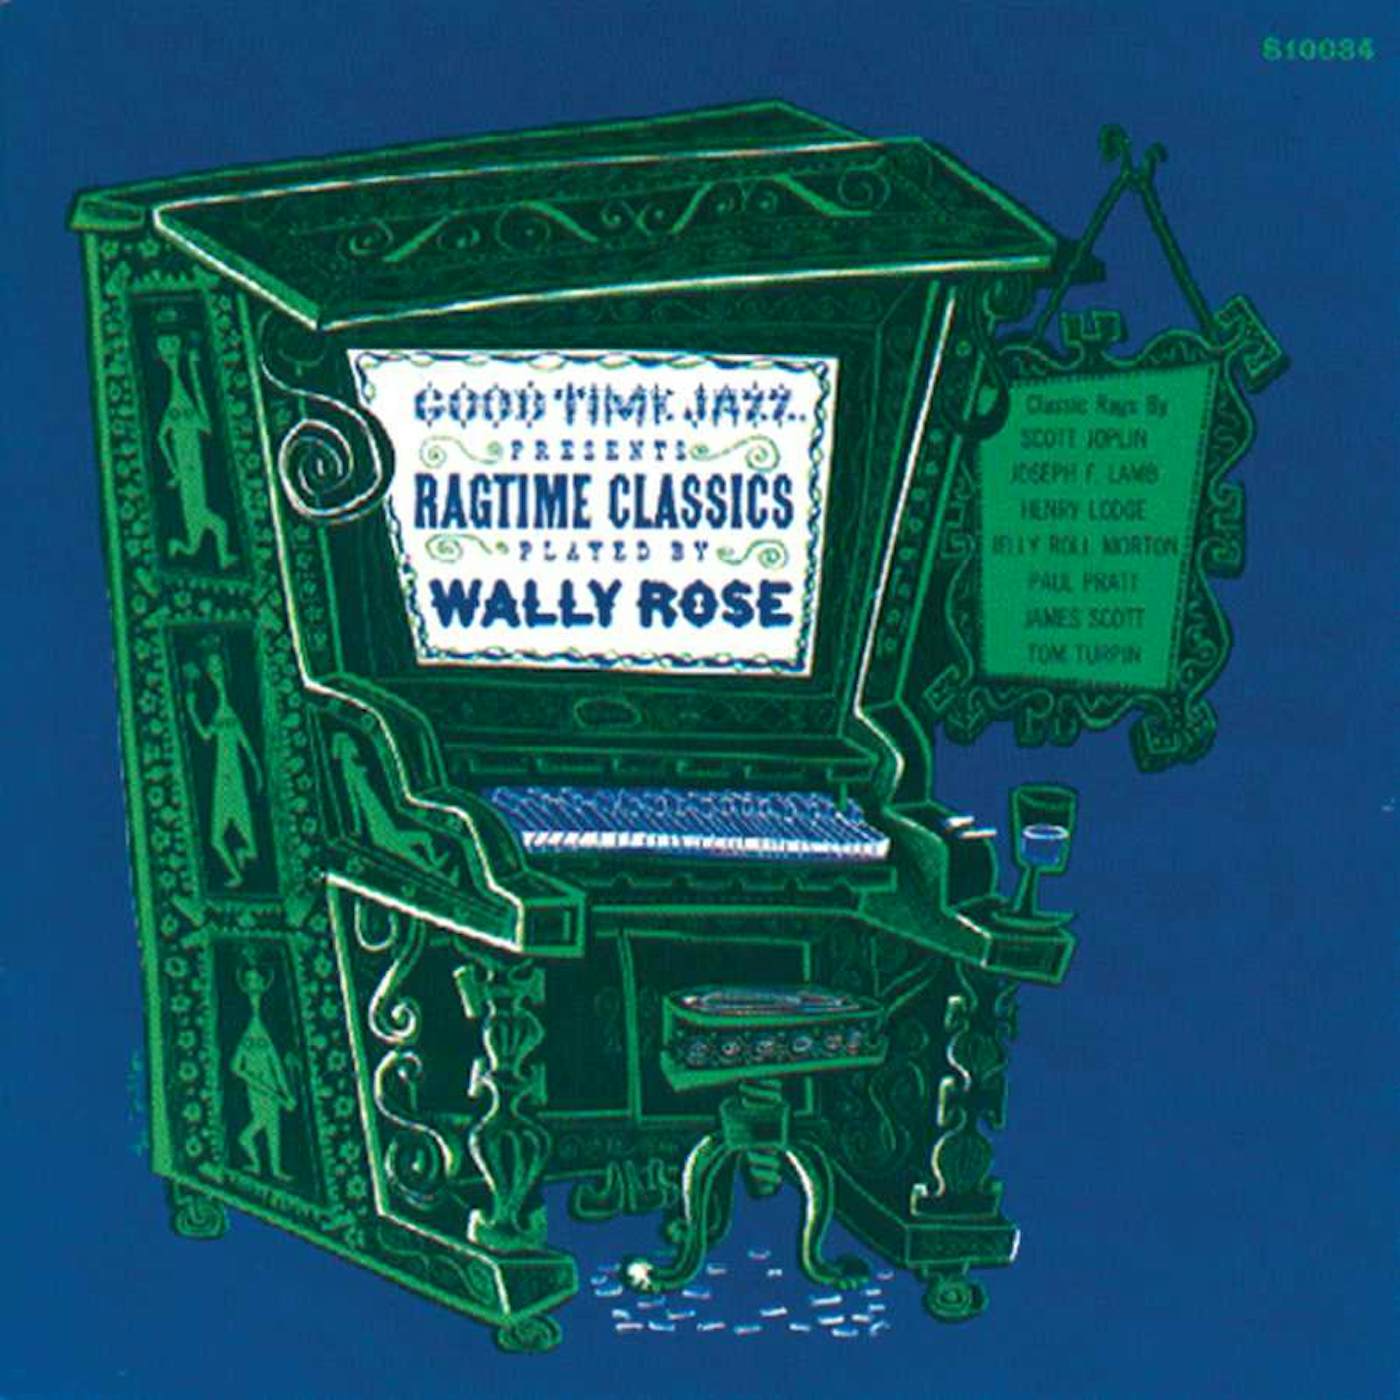 Wally Rose Ragtime Classics Vinyl Record